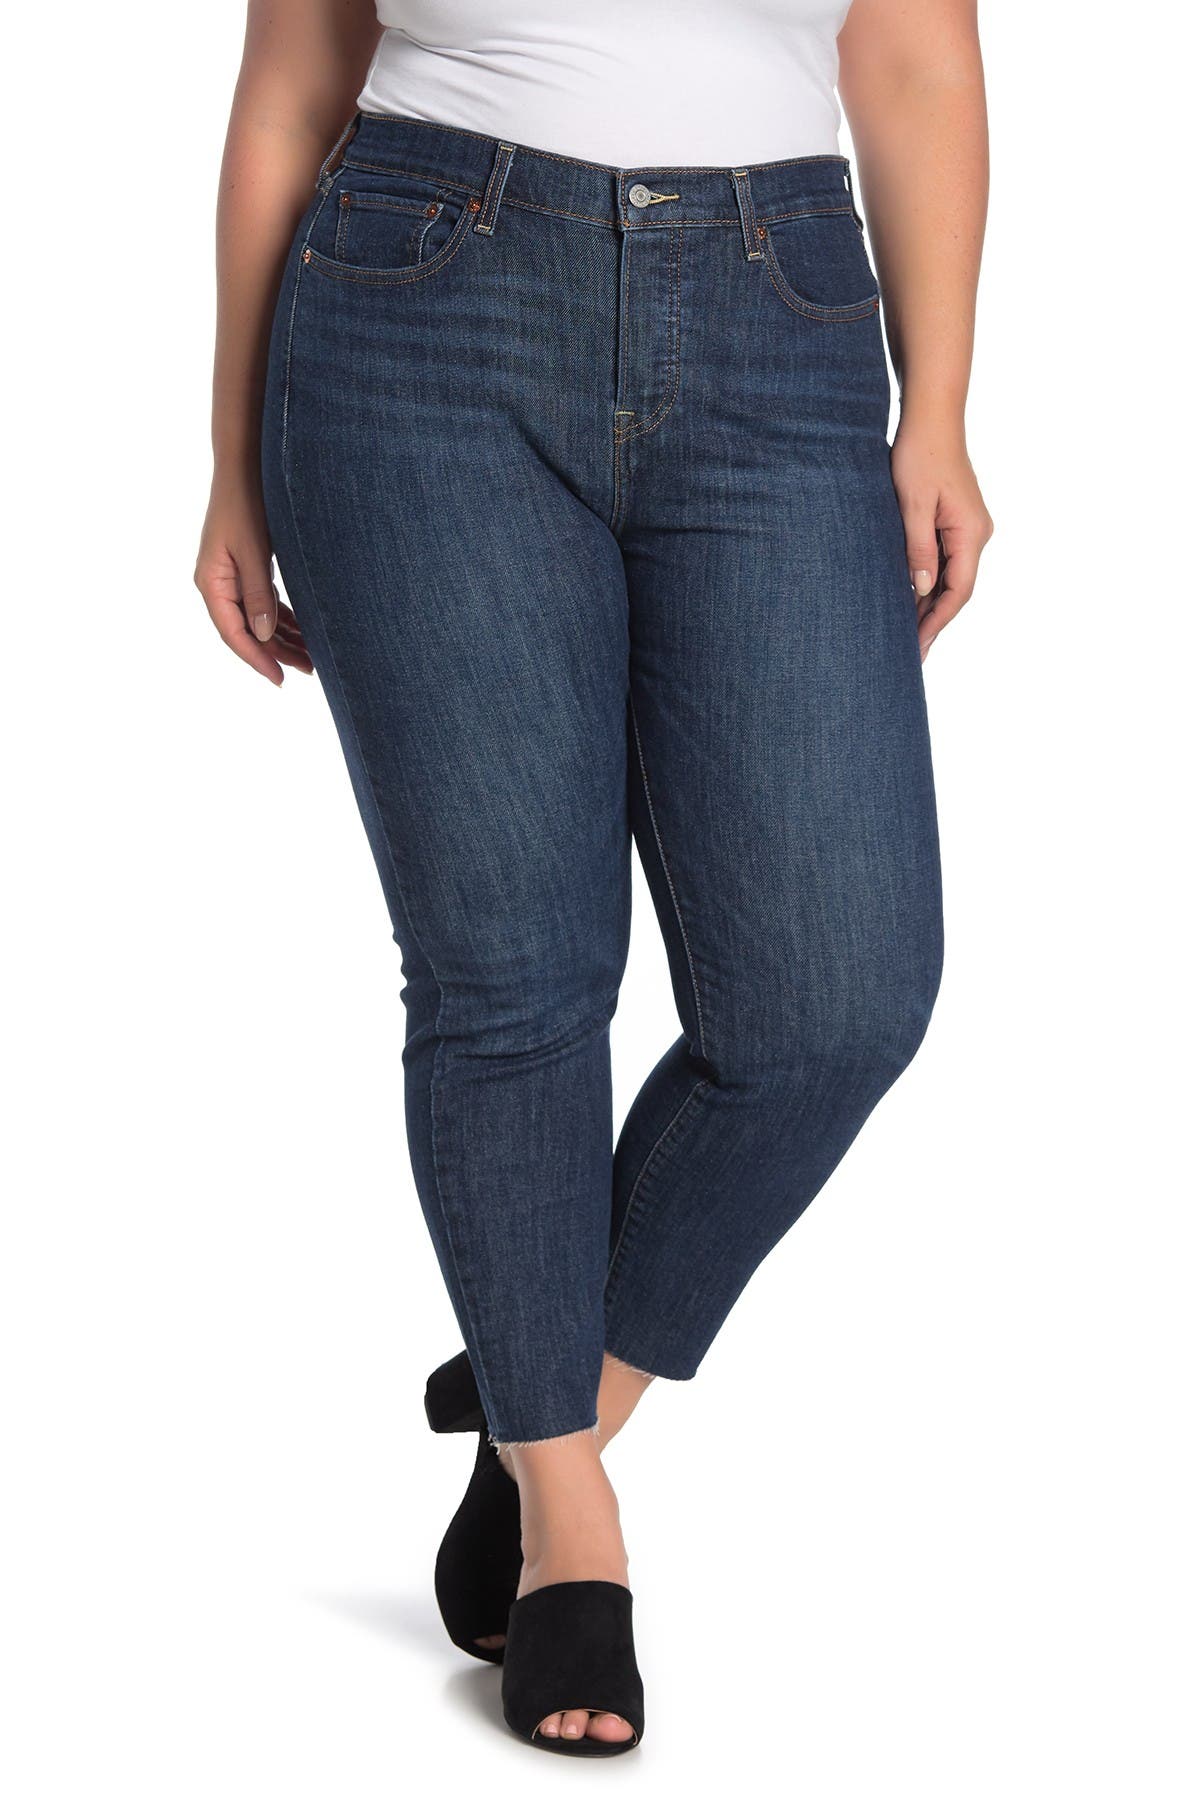 levi's wedgie skinny jeans